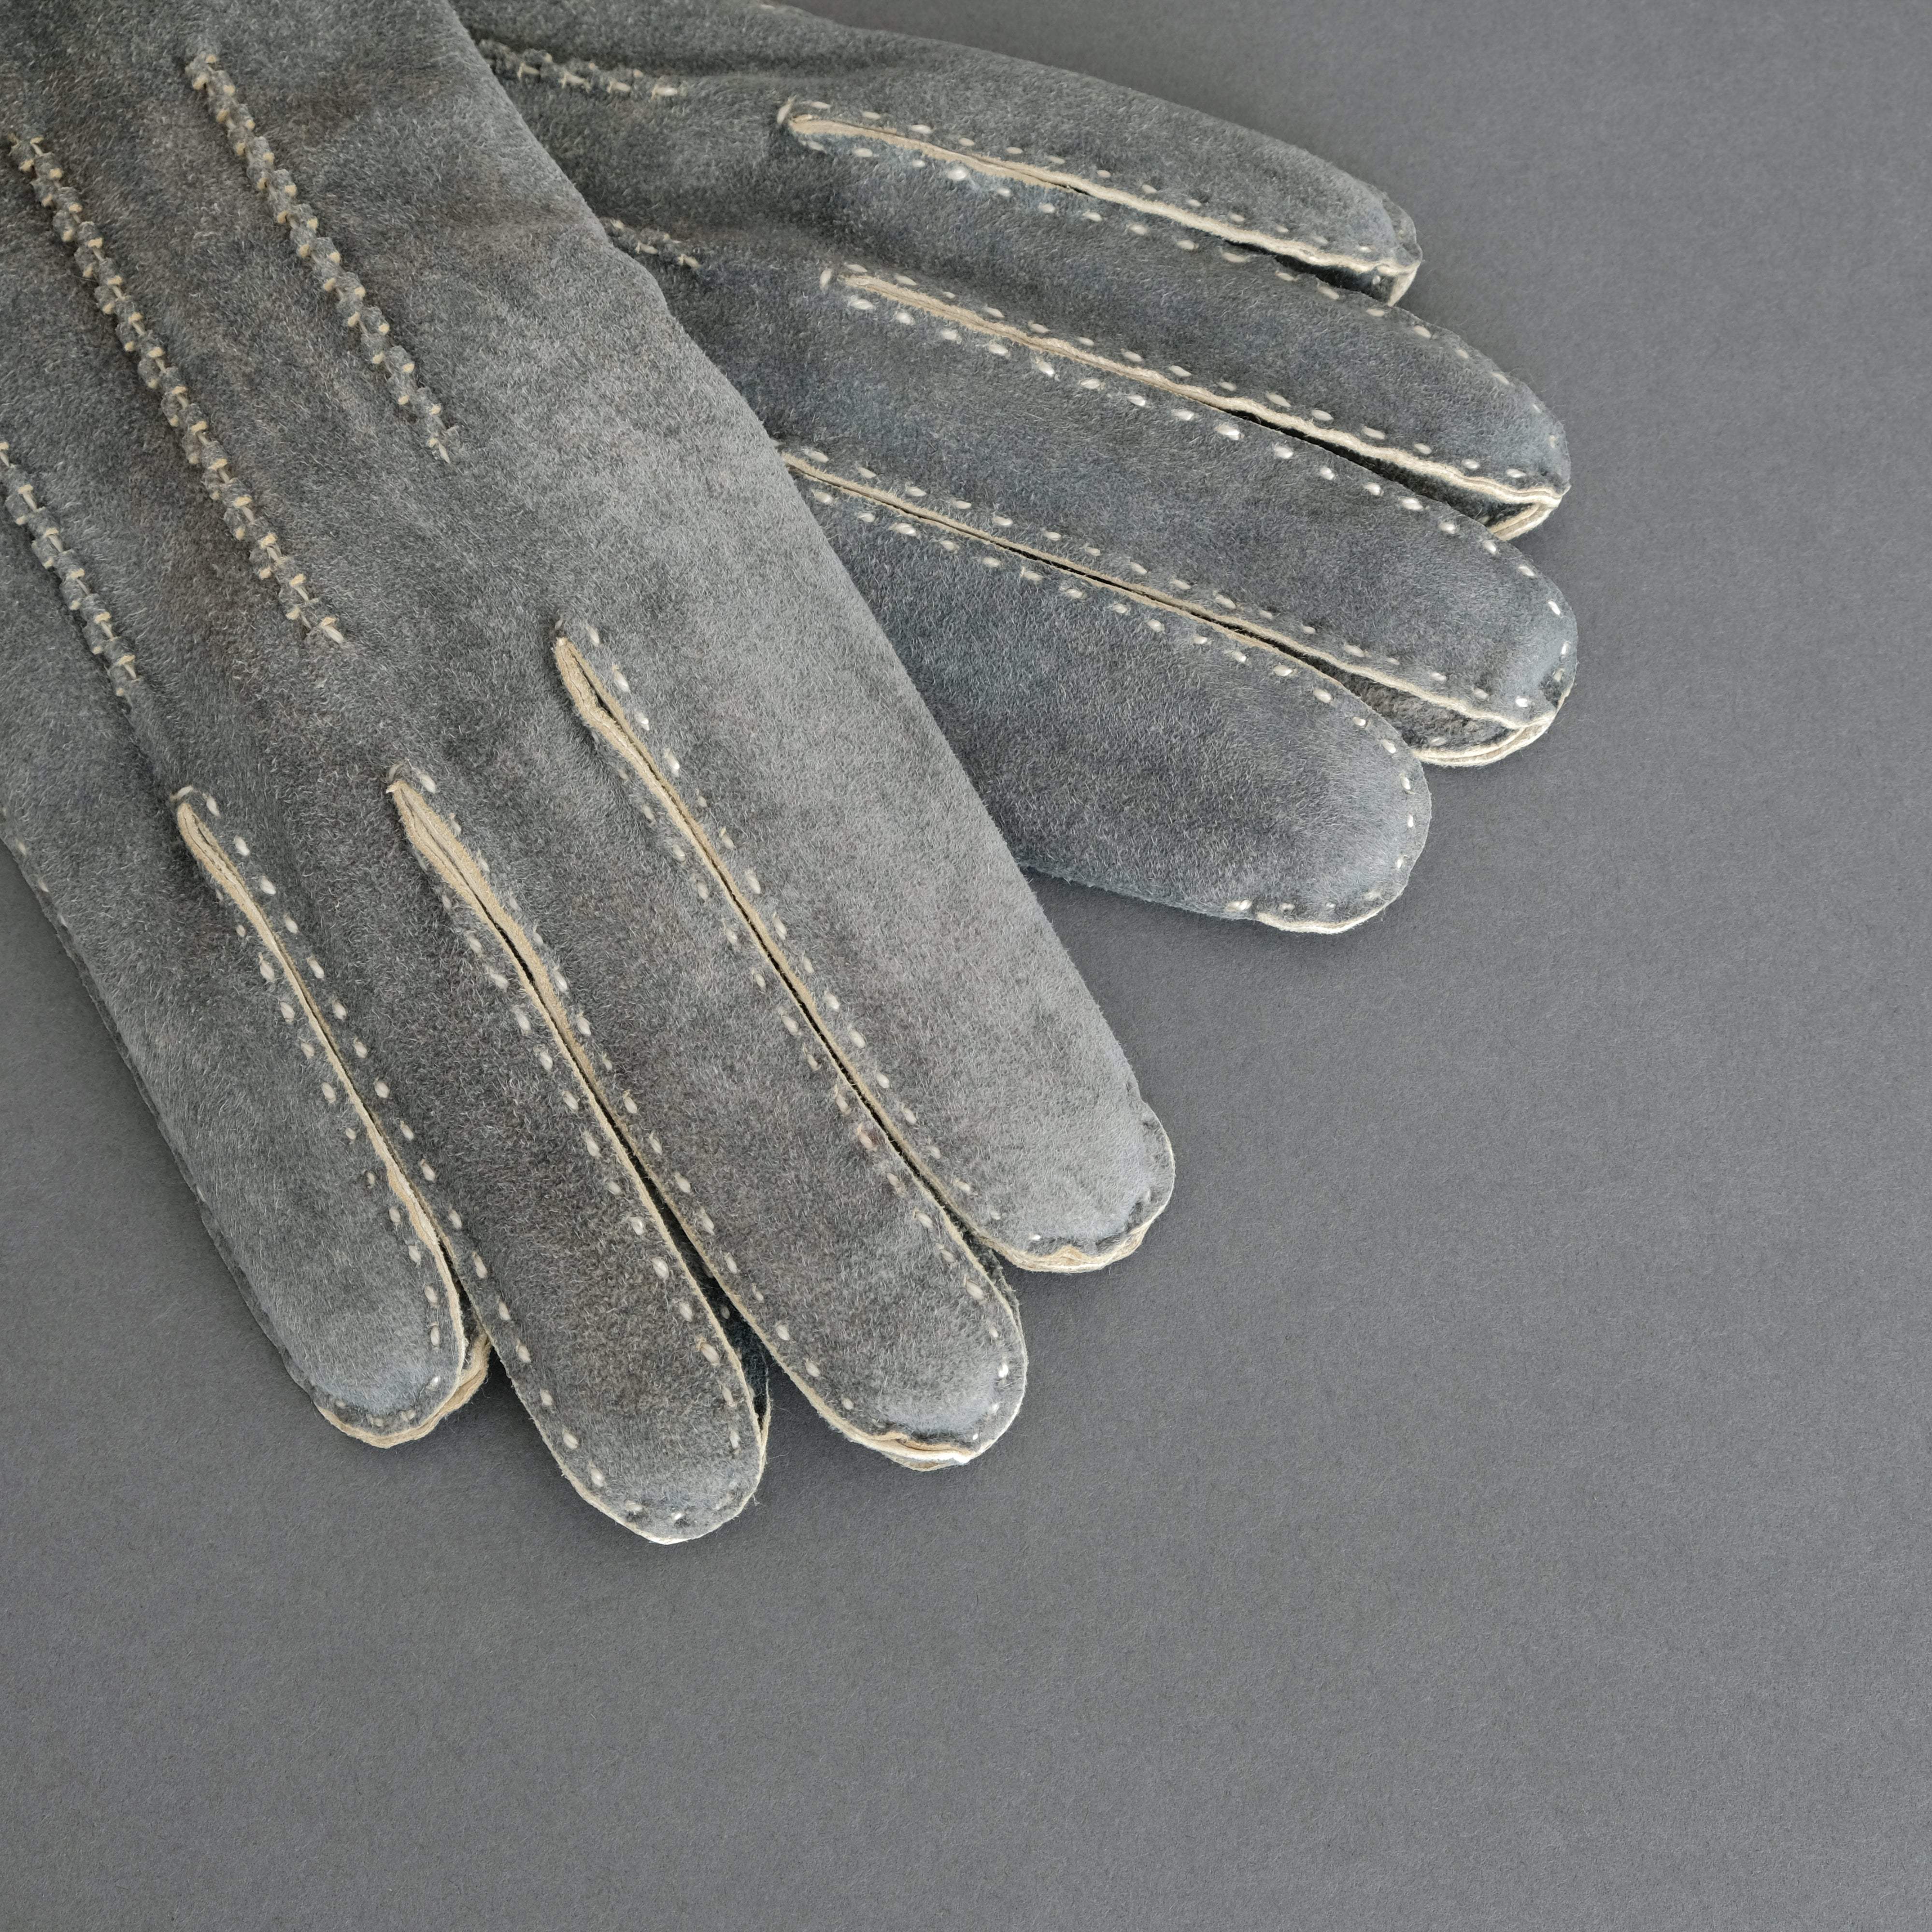 Gentlemen's Gloves from Grey-Blue Goatskin Lined with Cashmere - TR Handschuhe Wien - Thomas Riemer Handmade Gloves